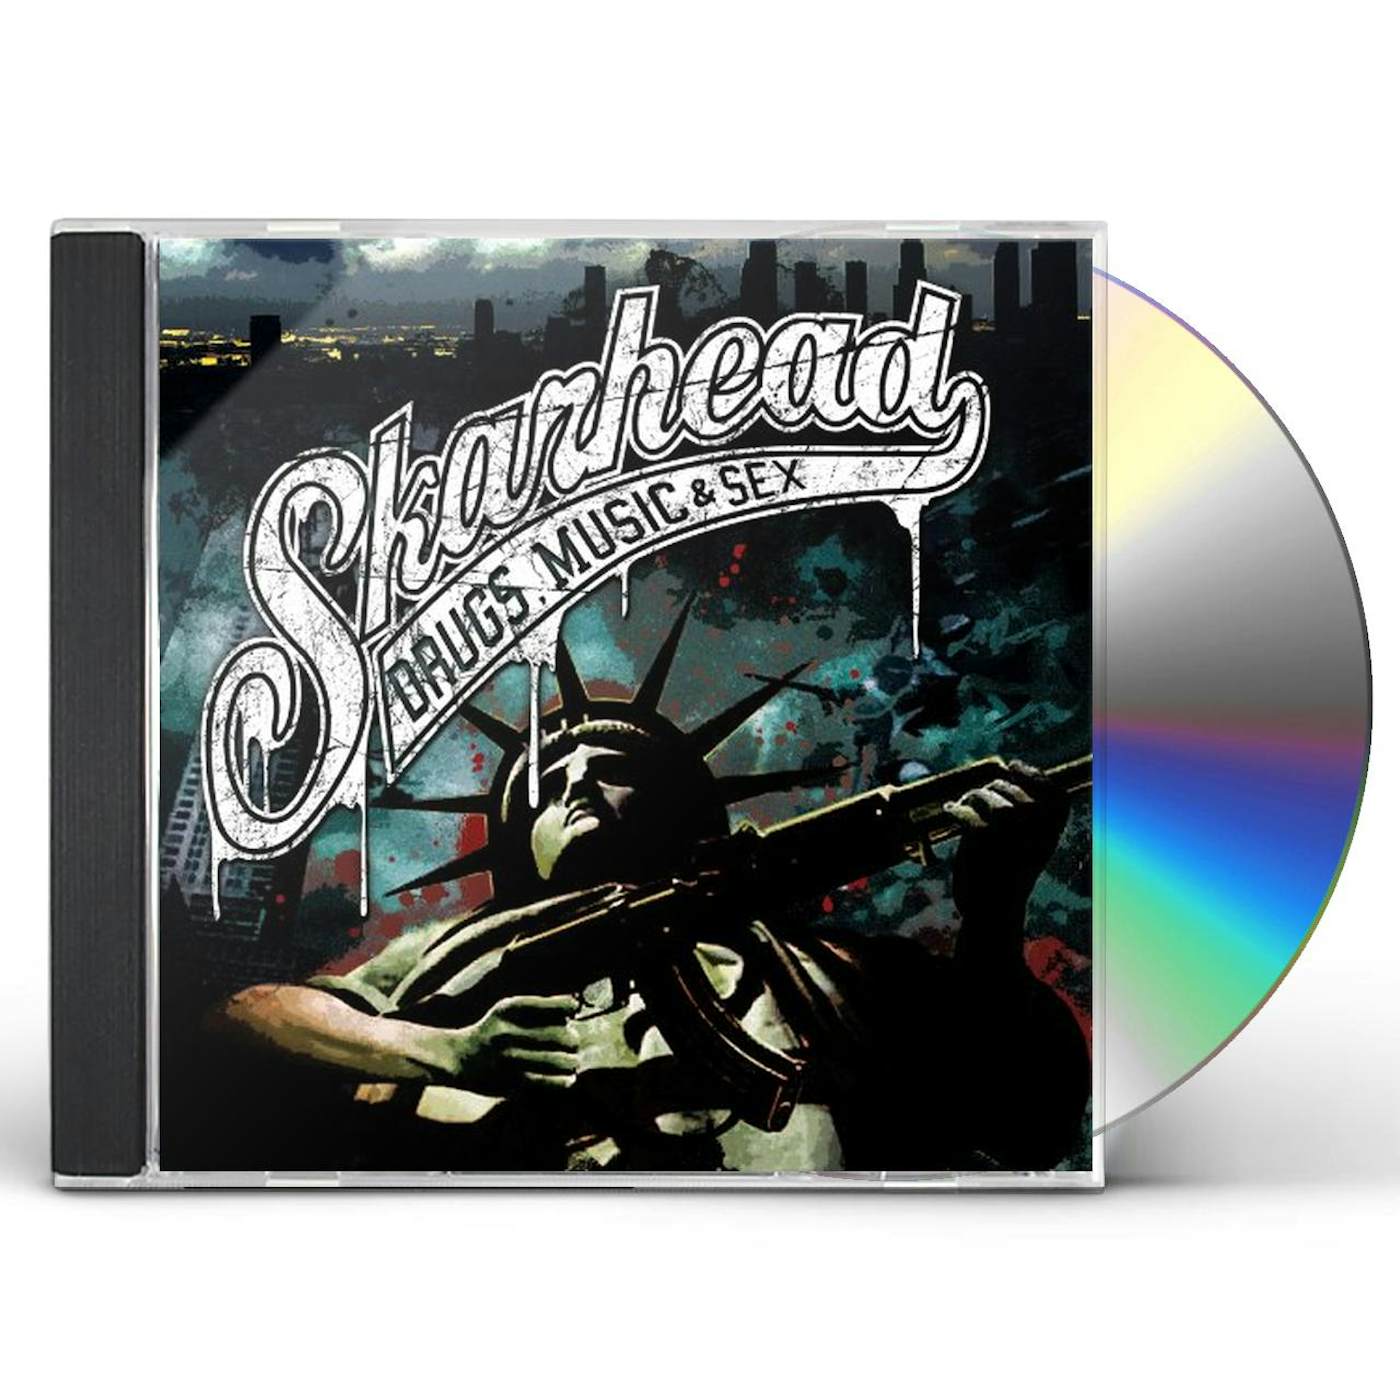 Skarhead DRUGS MUSIC & SEX CD